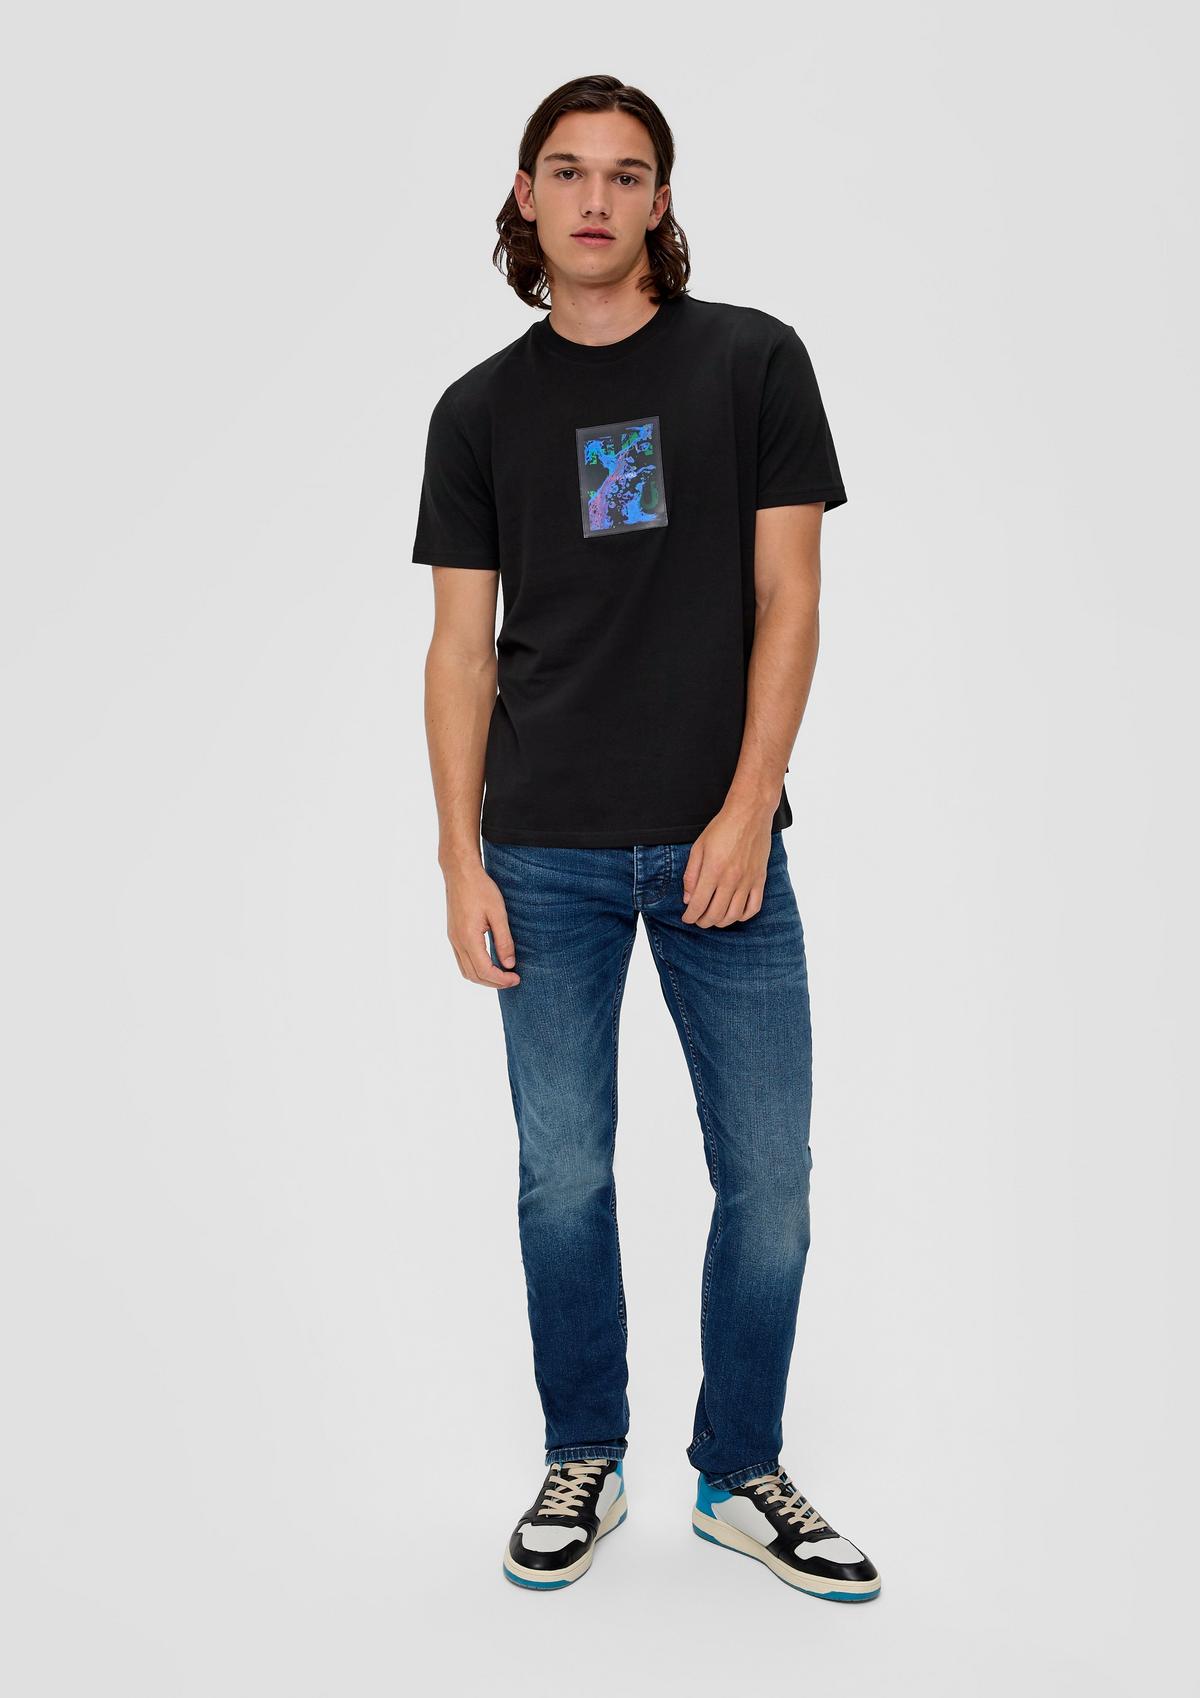 s.Oliver Shirt mit Hologramm-Patch